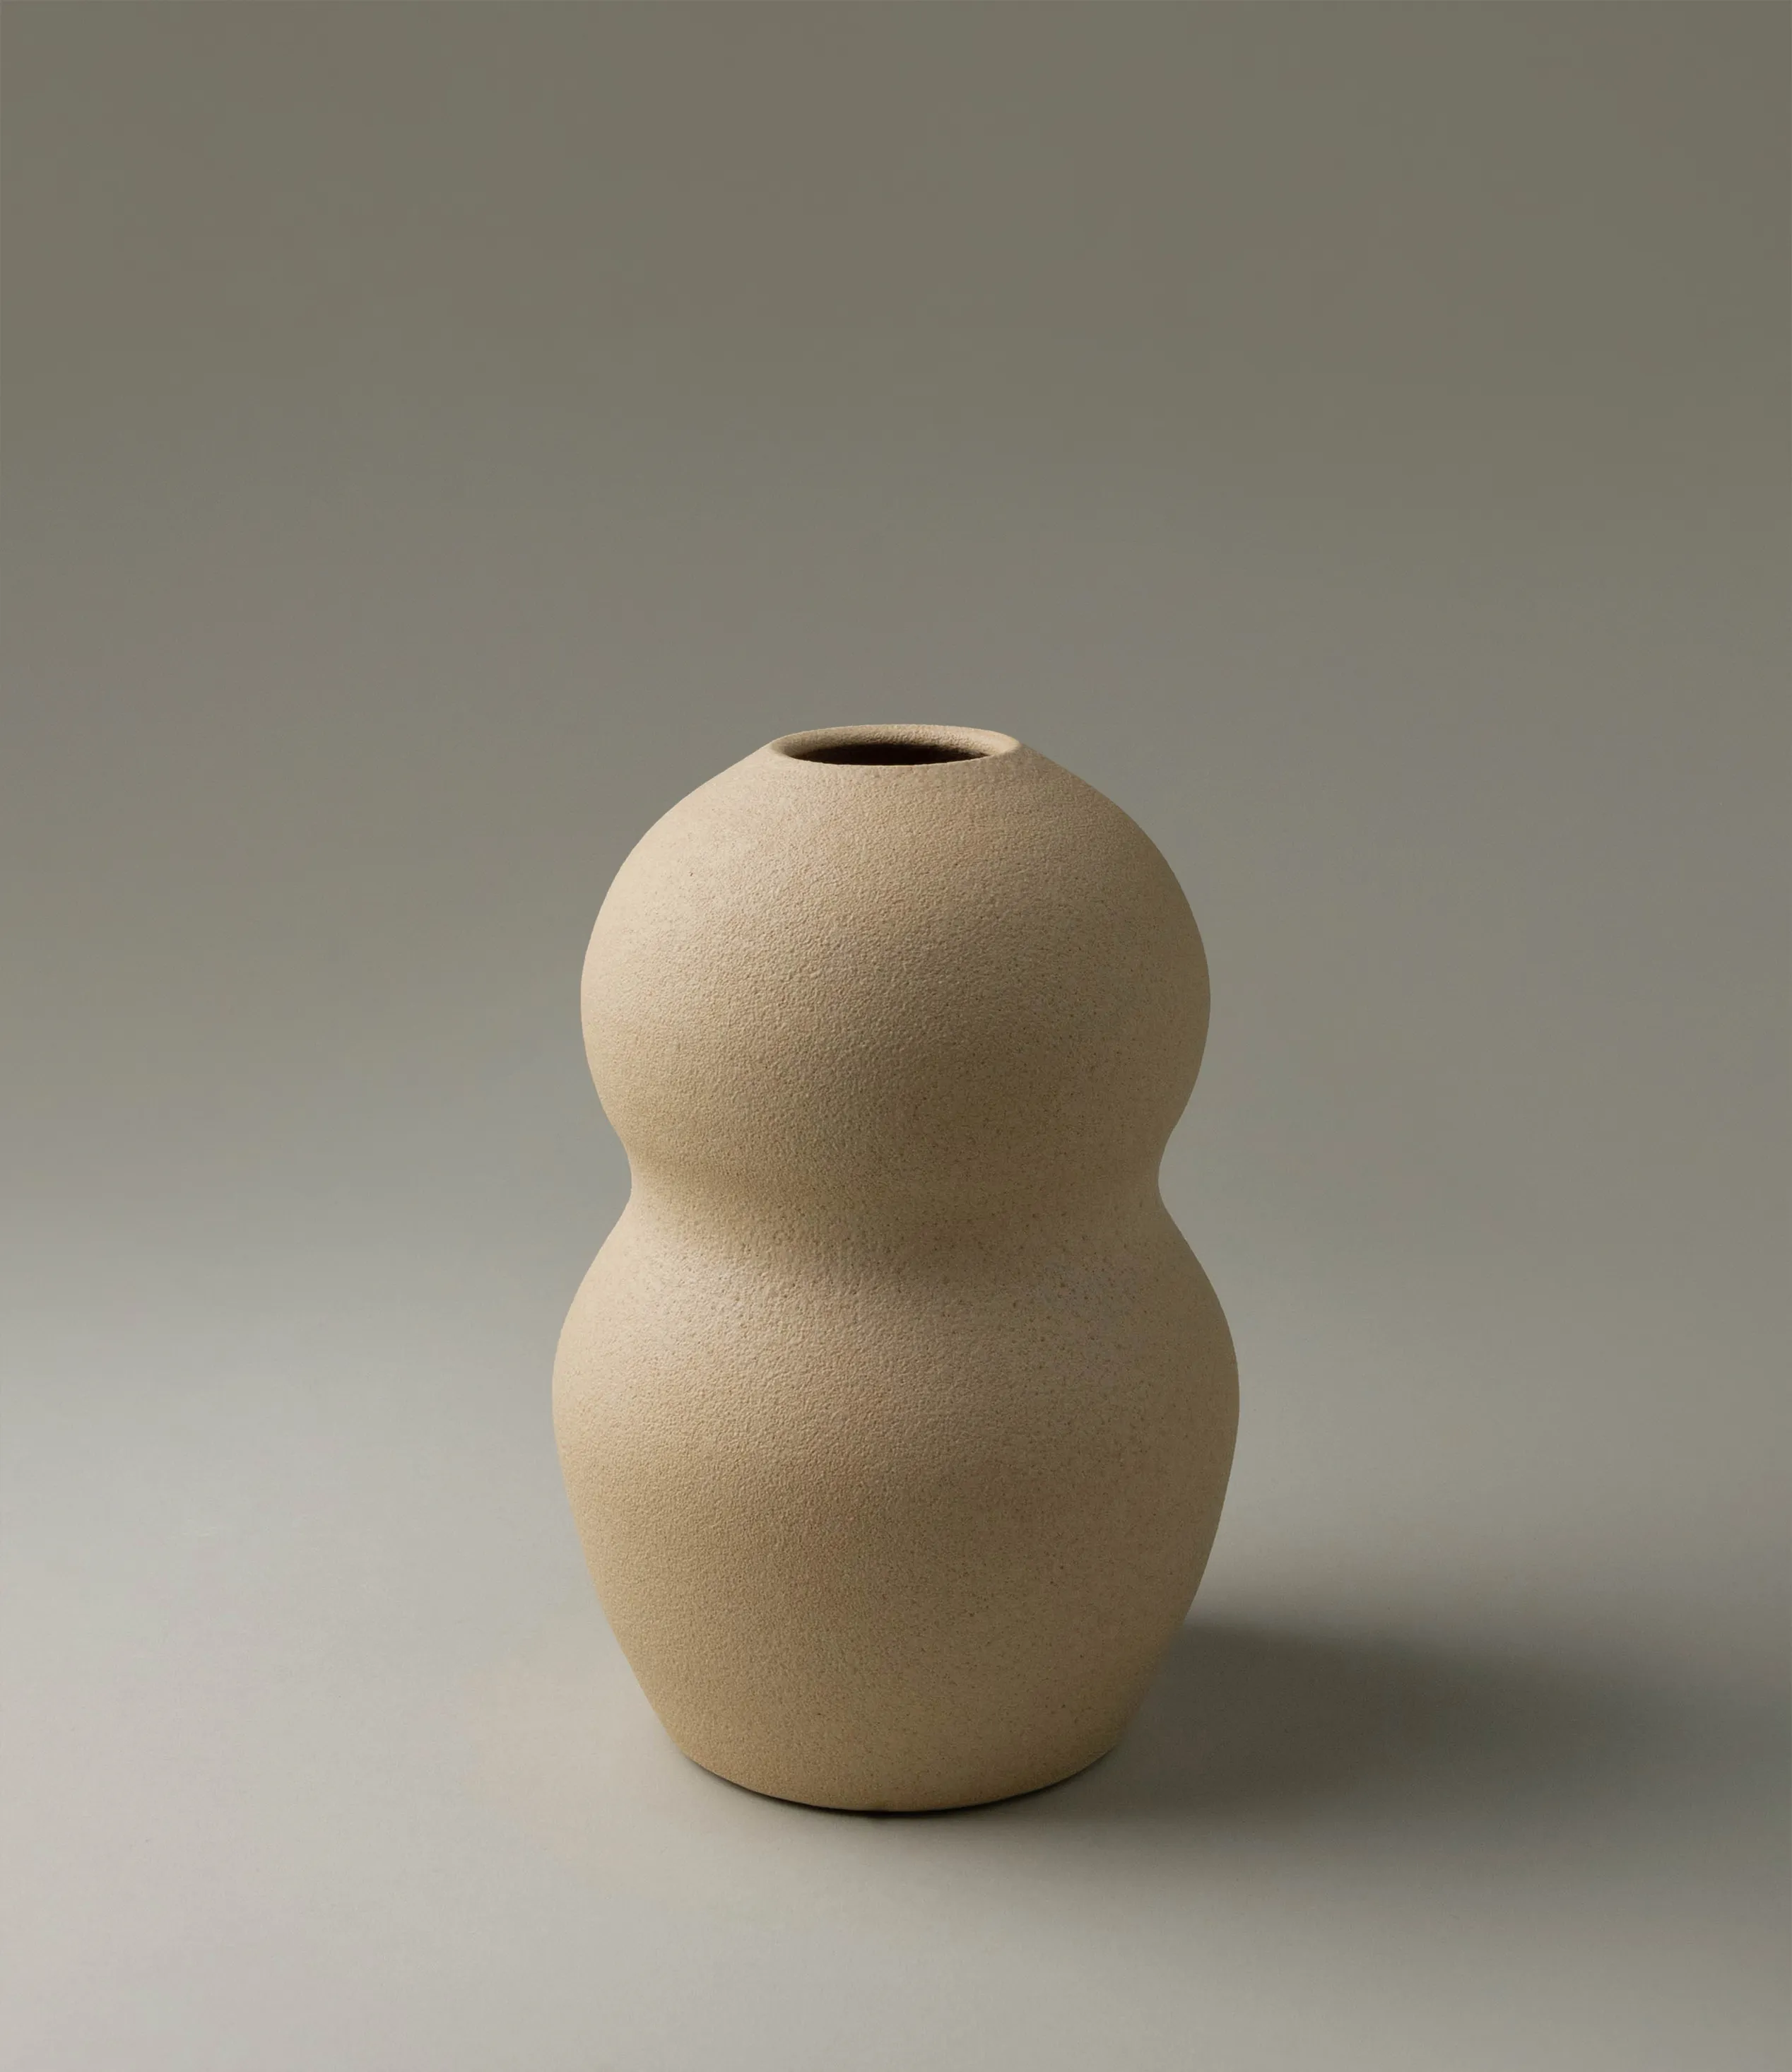 Palus Handmade Vase from Ocactuu with a Sand like finishing.